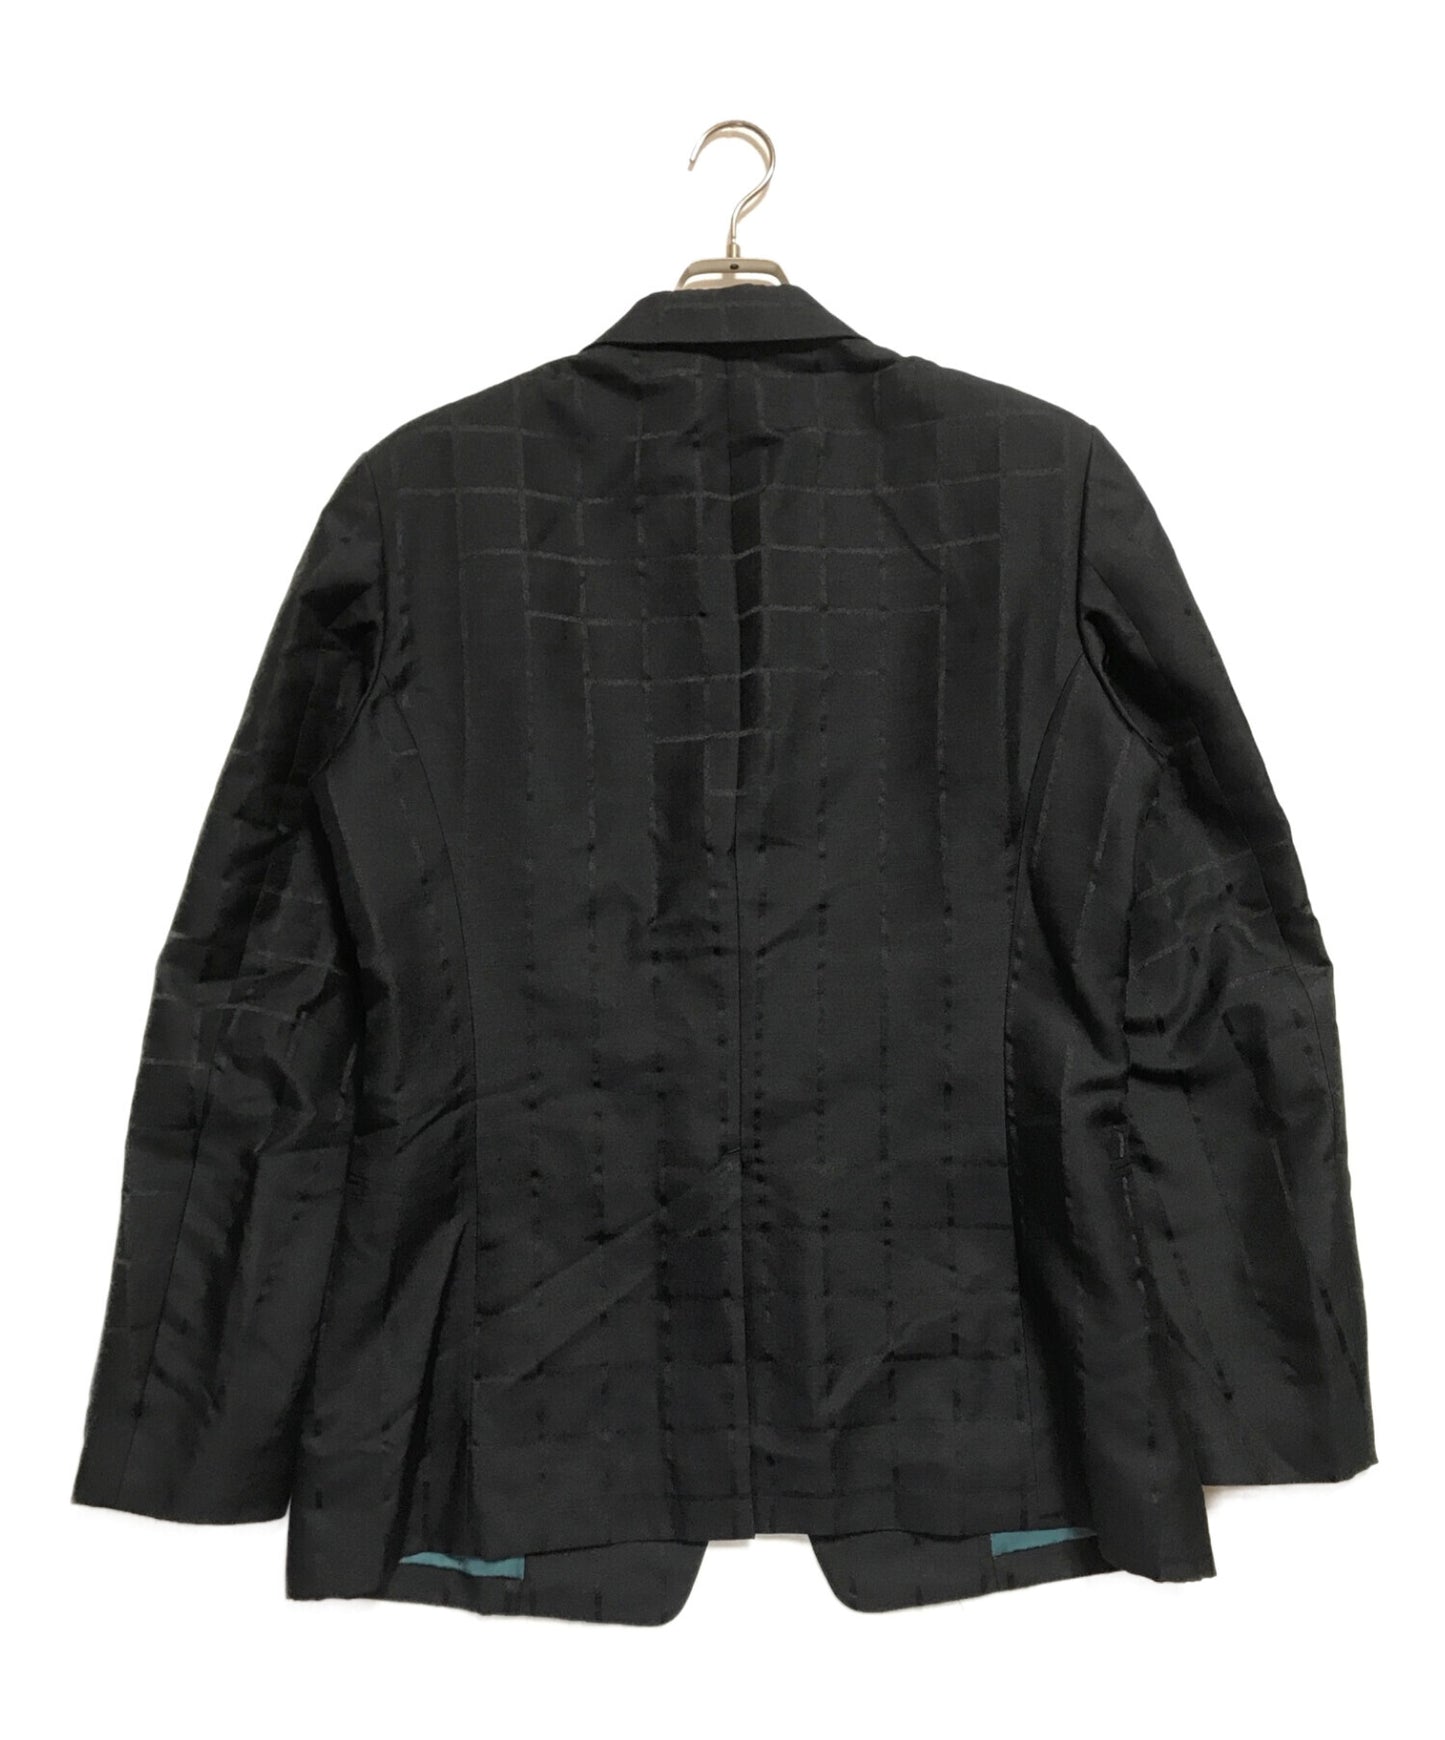 Issey Miyake Men Windpeahene Check Design Jacket Tailored Me53fd060